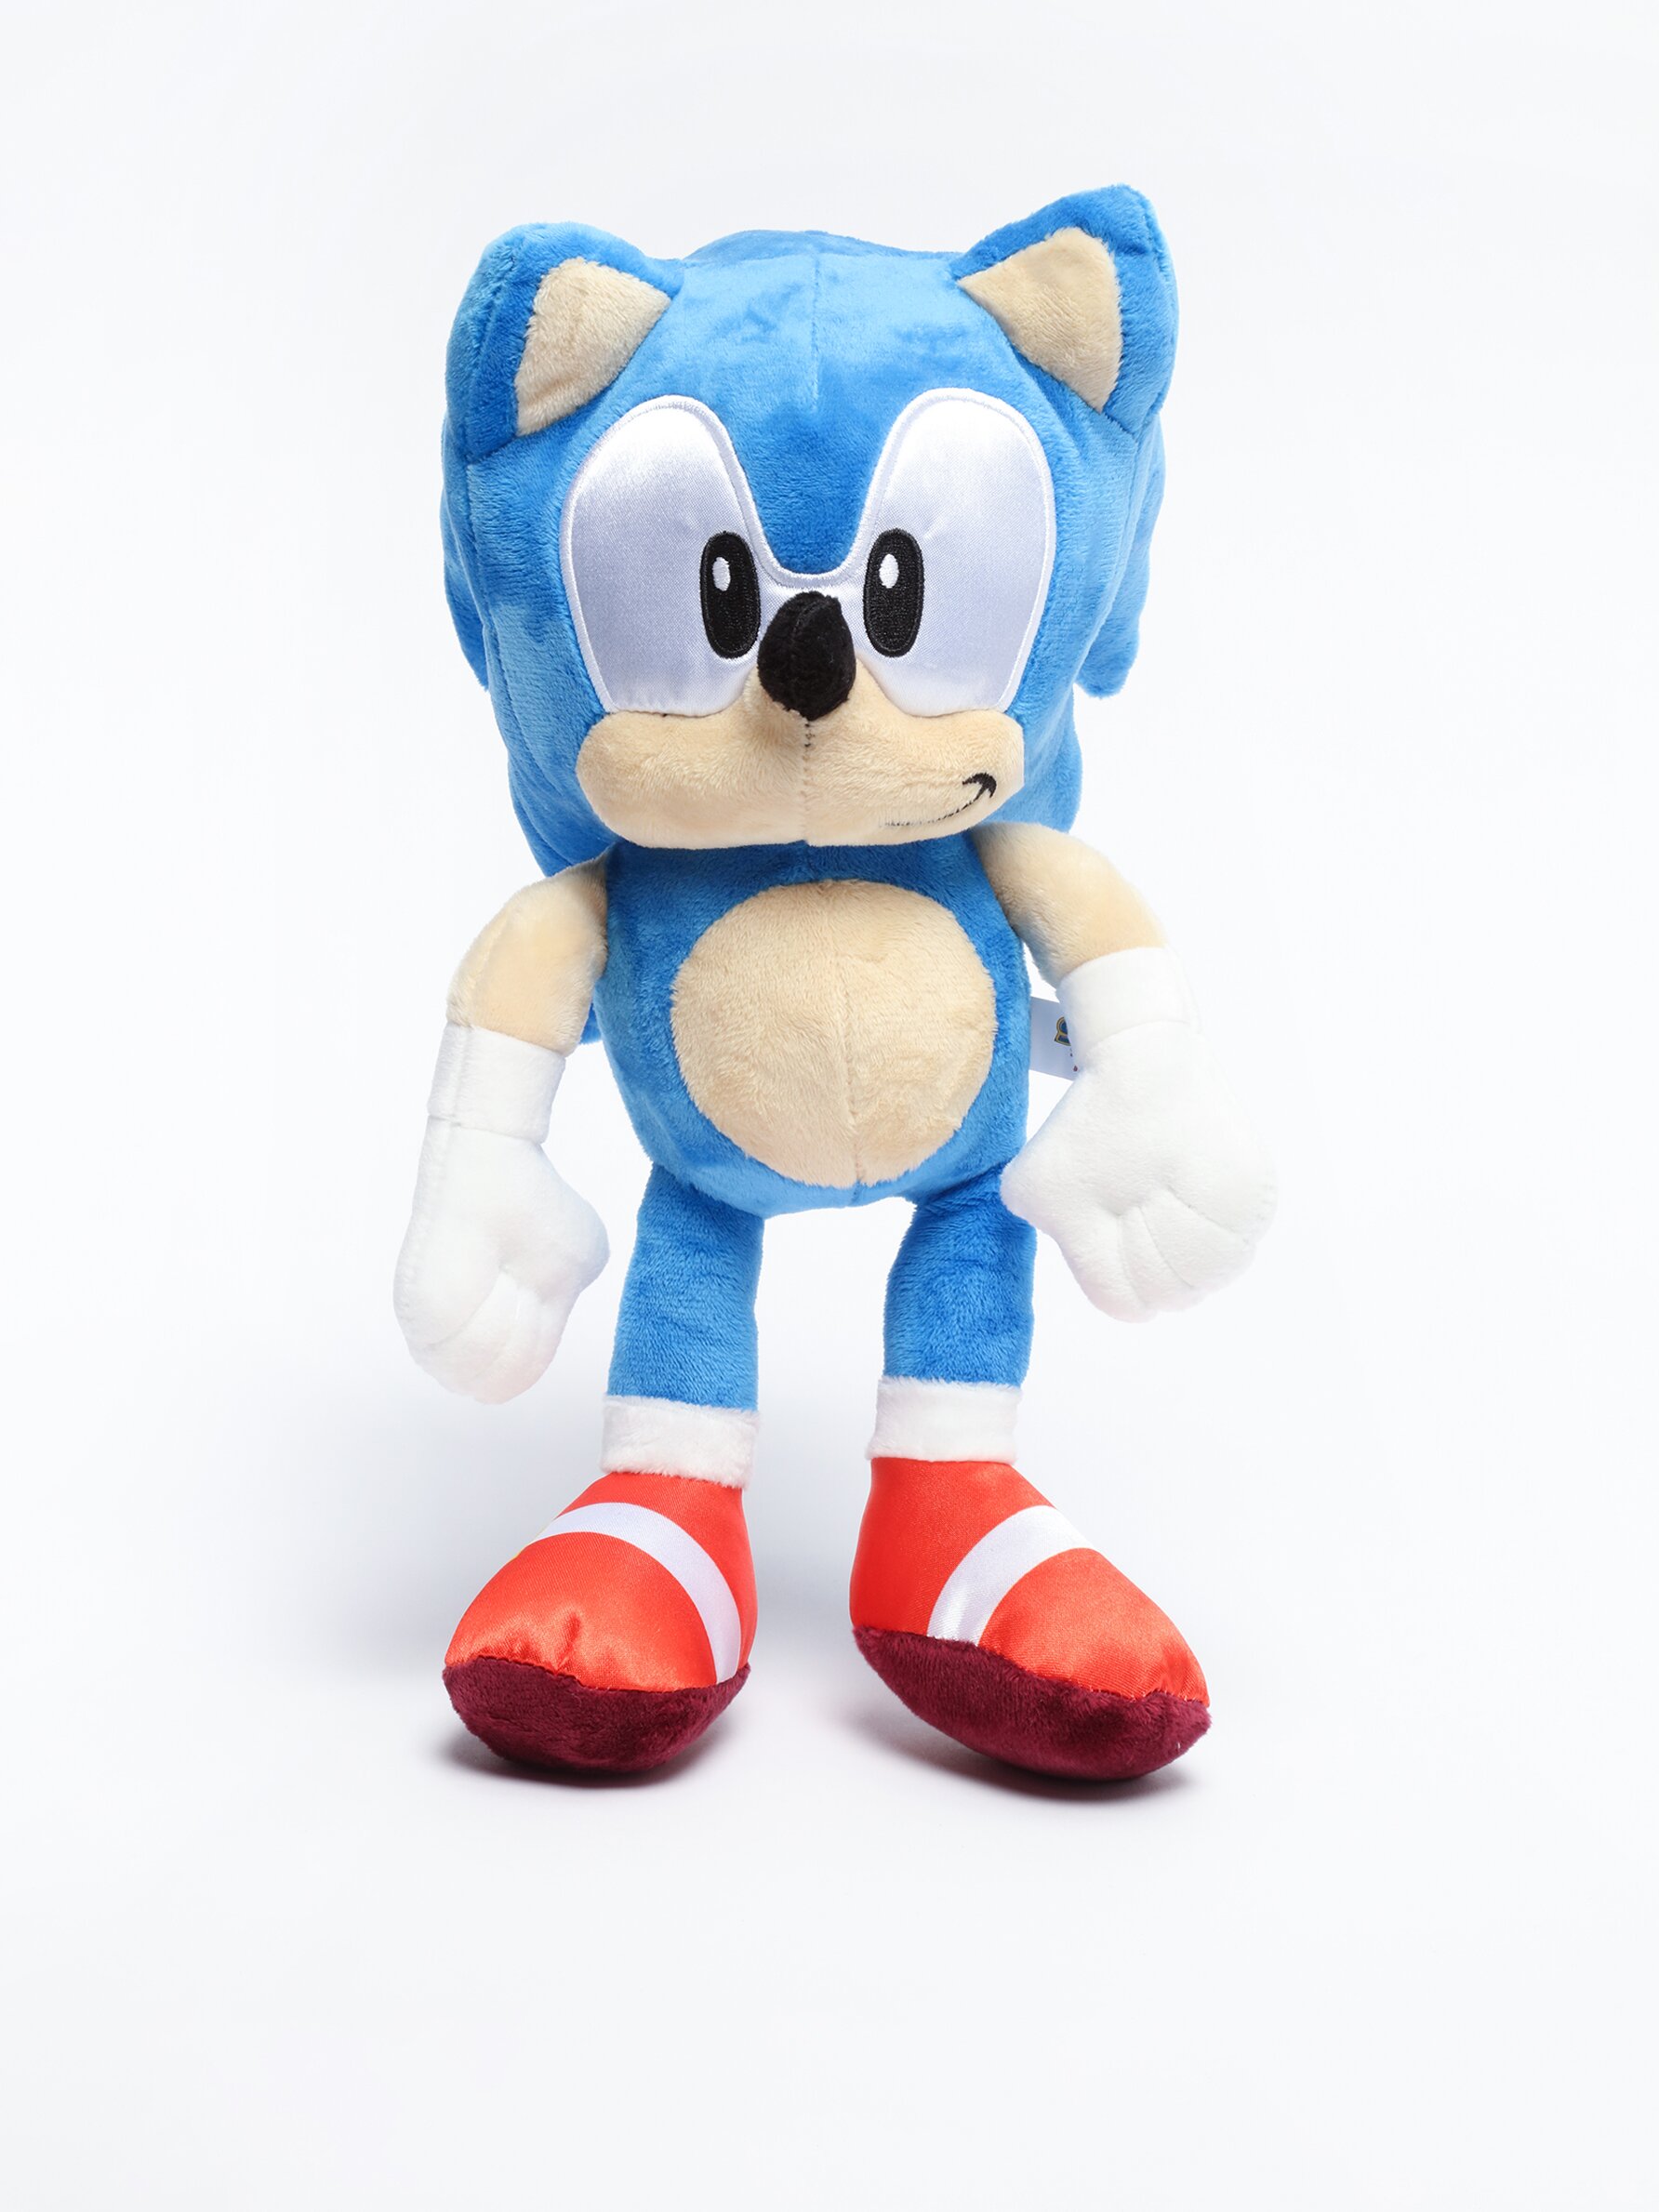 Sonic The Hedgehog (@sonic_portugal) / X